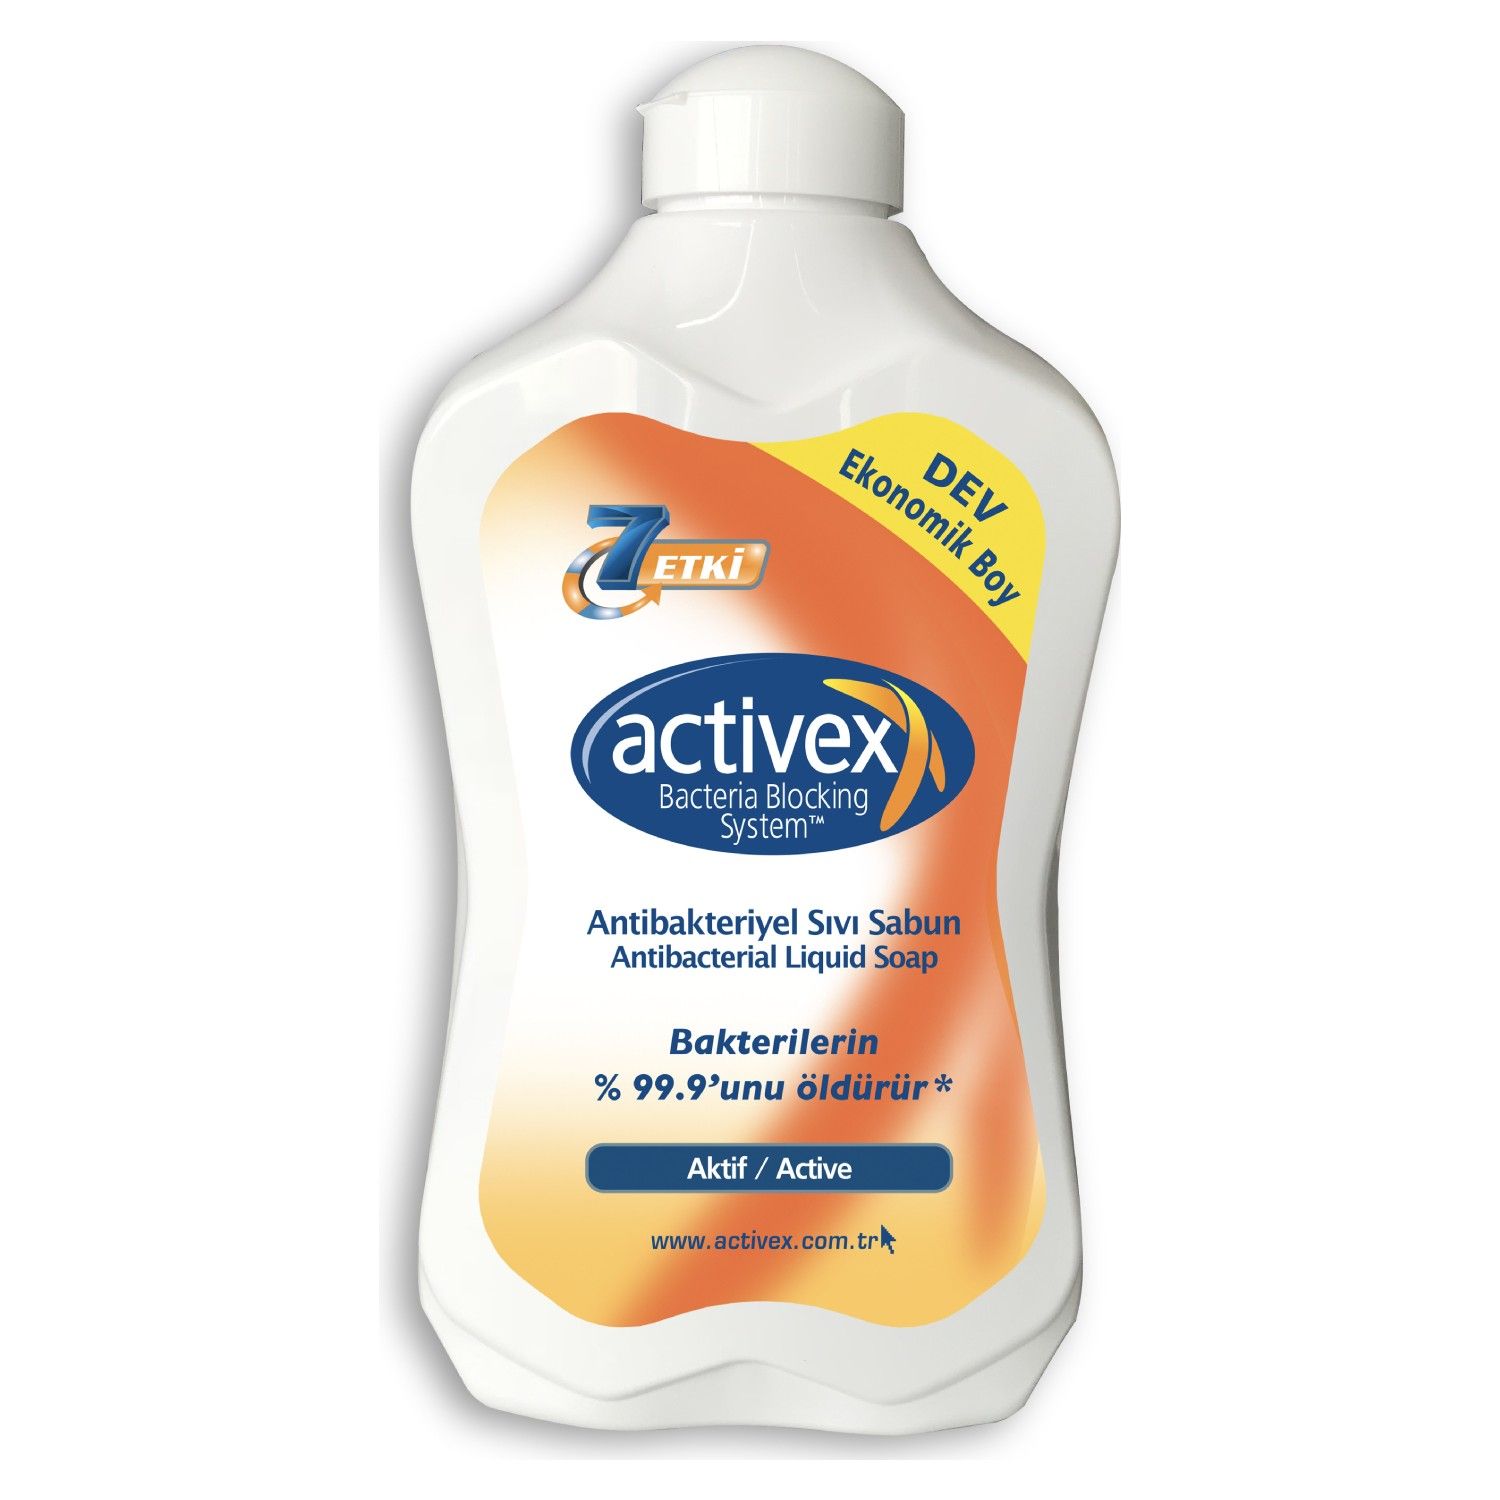 Activex Antibakteriyel Sıvı Sabun Aktif 1.5 Lt